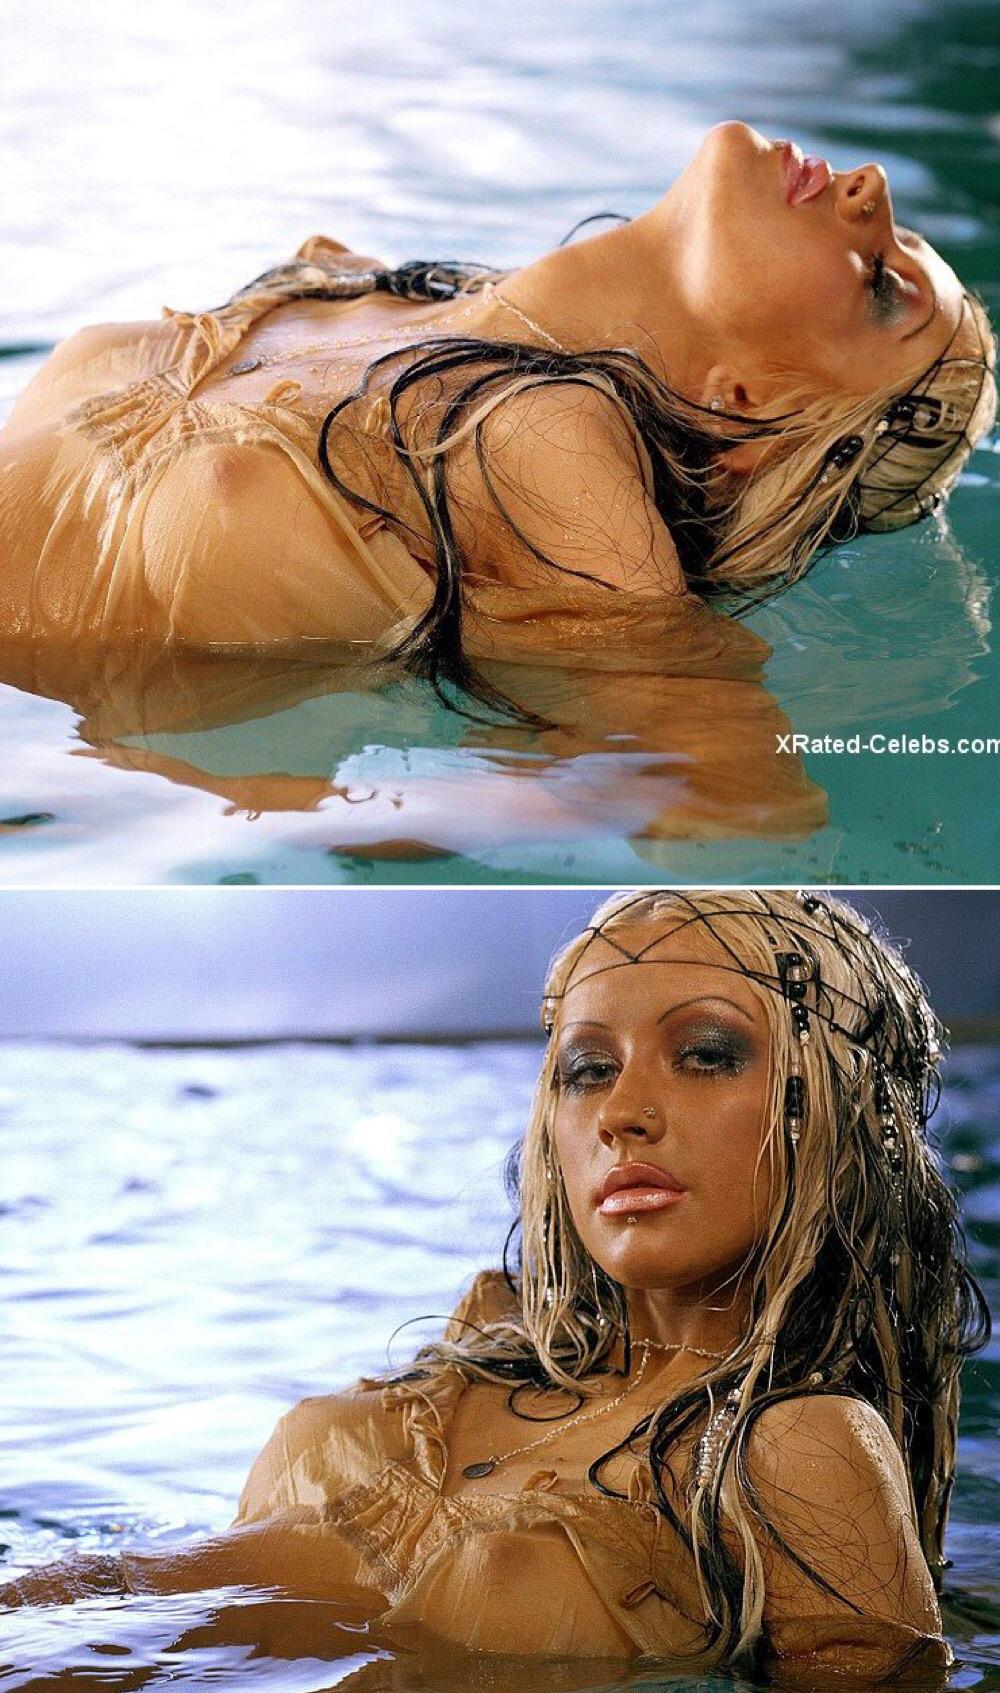 Christina Aguilera.jpg